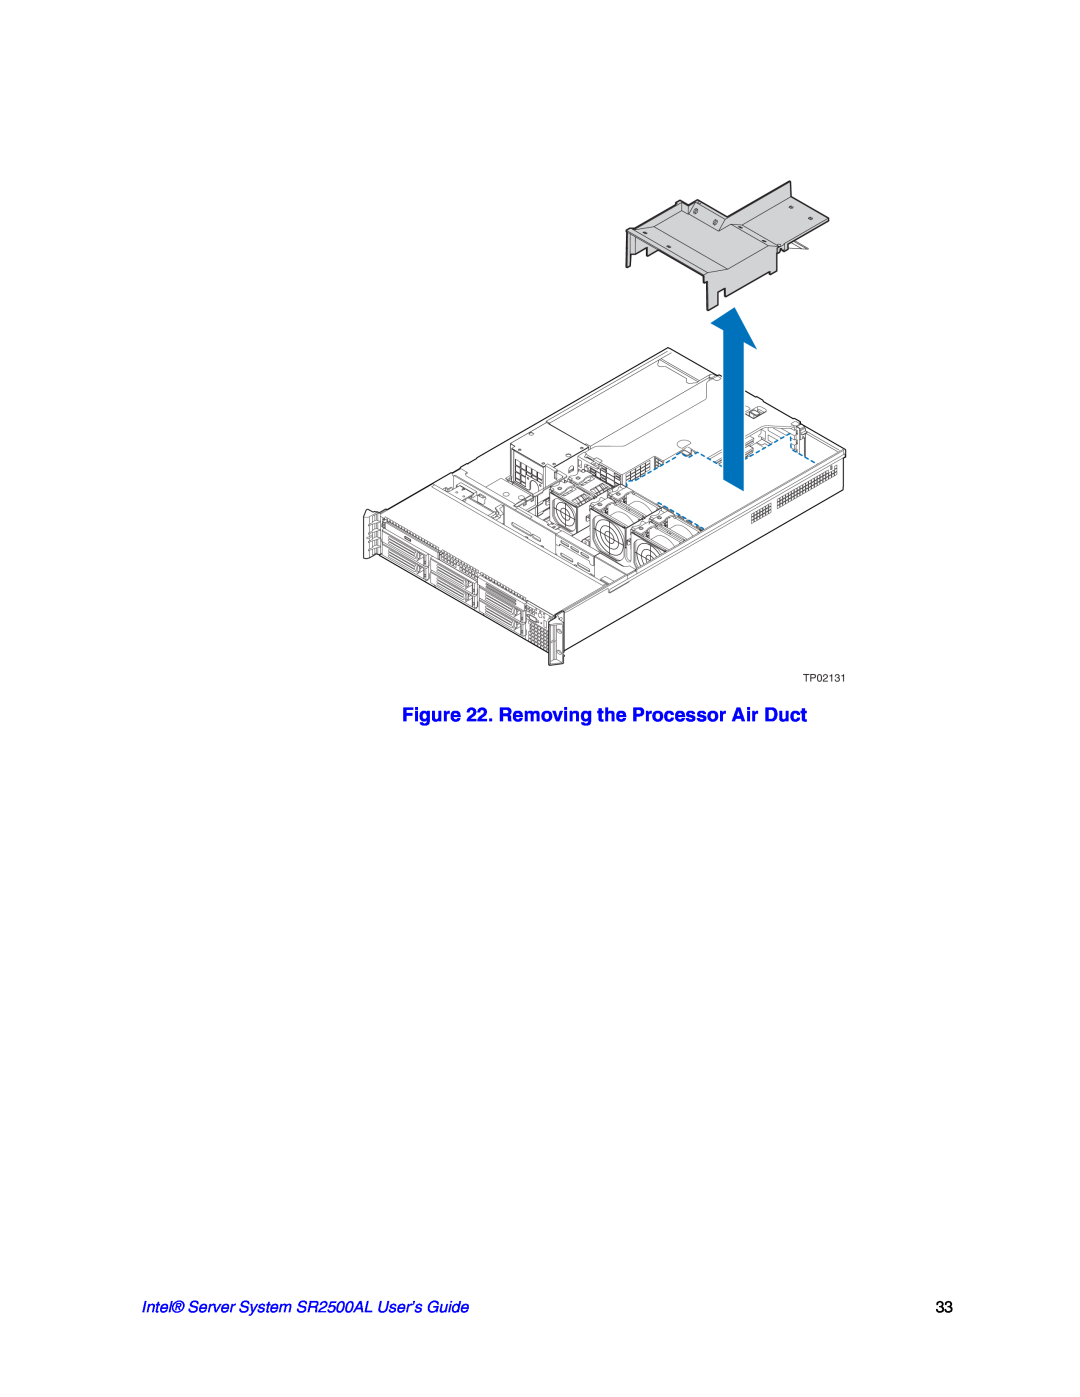 Intel manual Removing the Processor Air Duct, Intel Server System SR2500AL User’s Guide, TP02131 